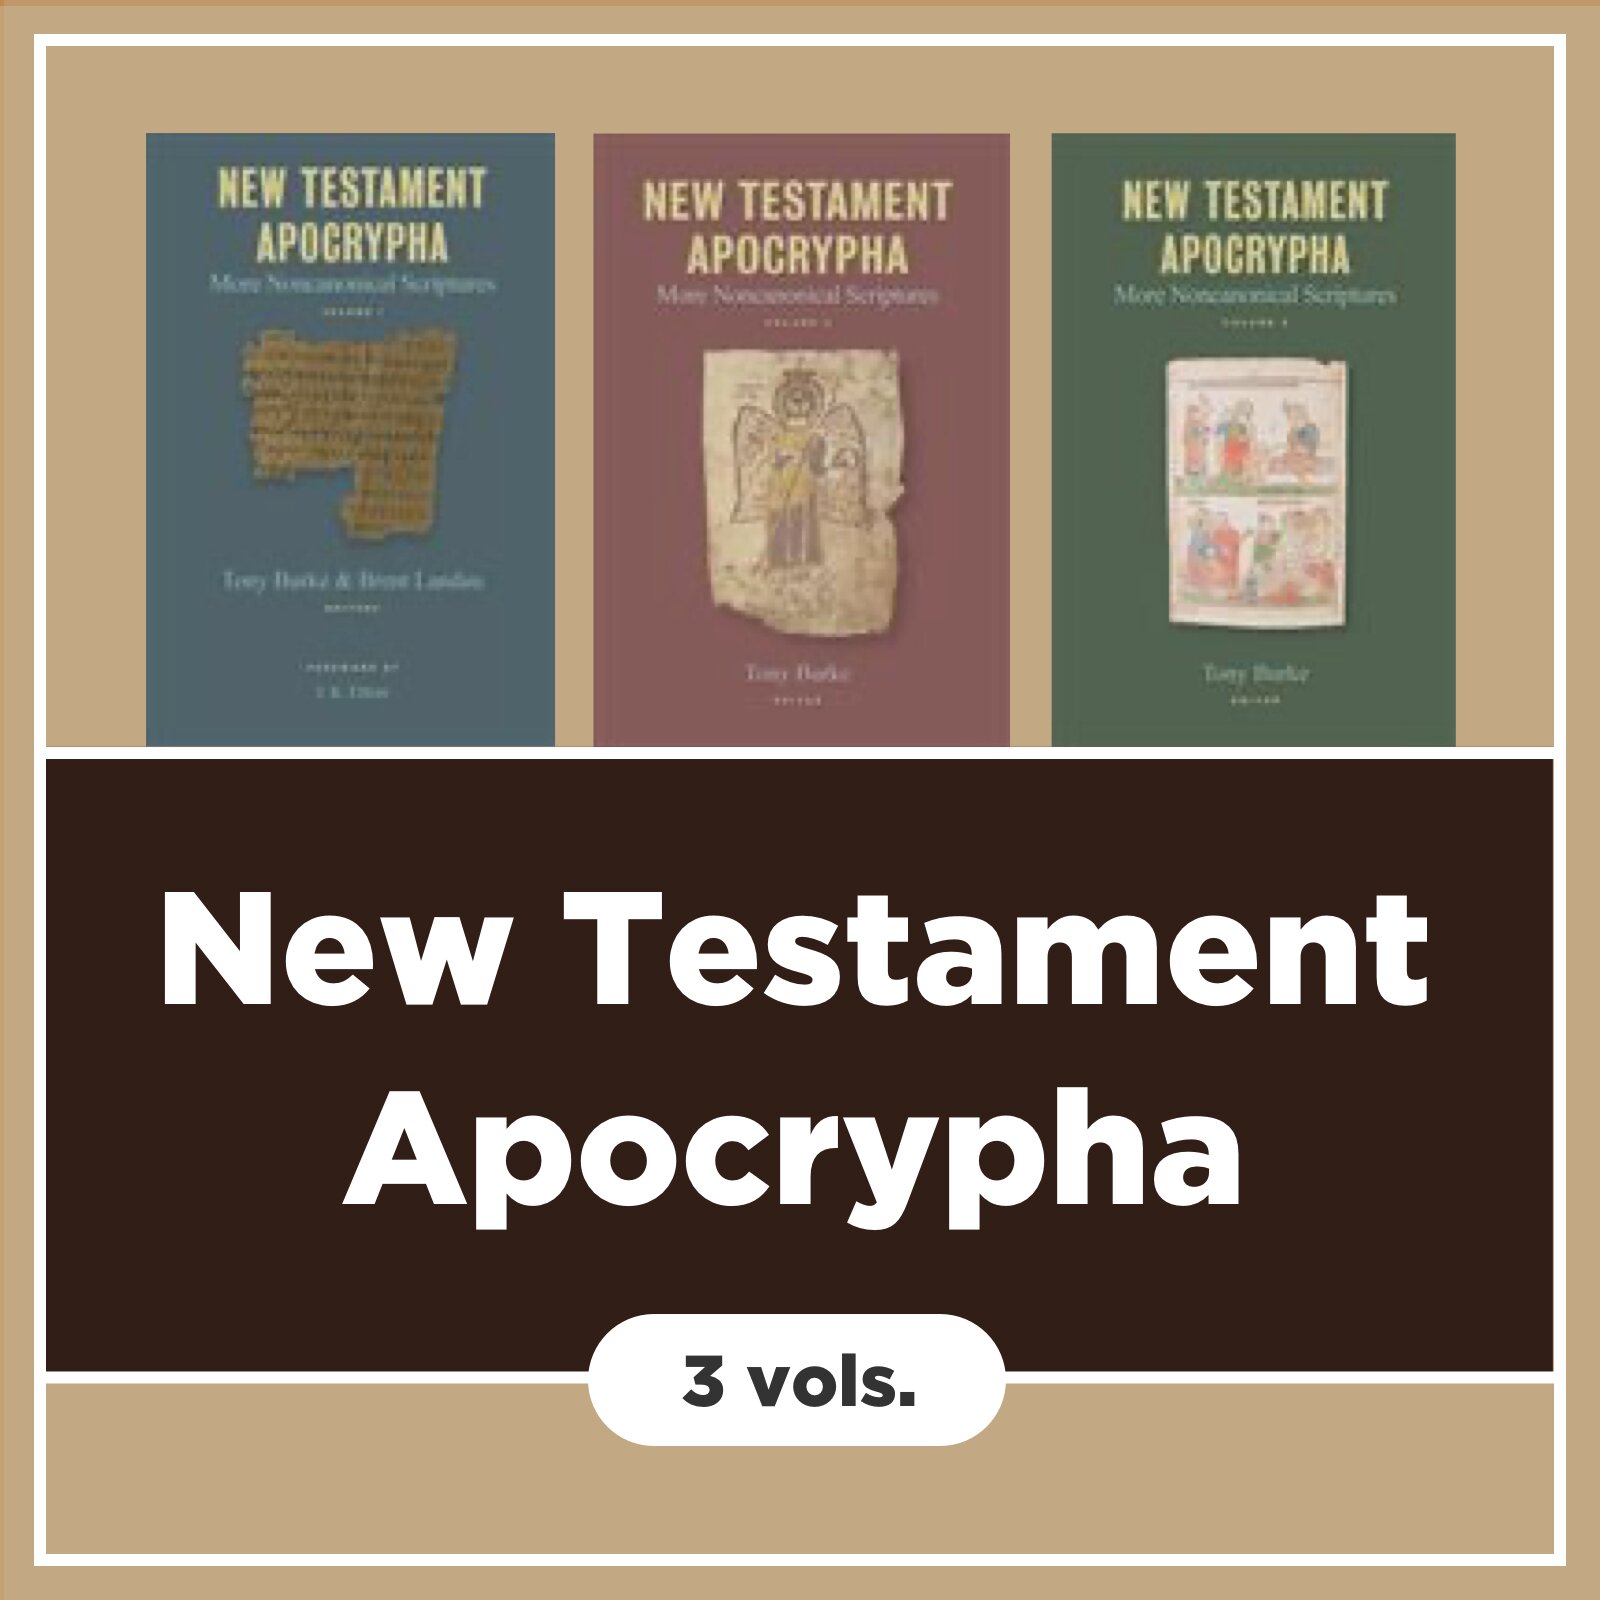 New Testament Apocrypha: More Noncanonical Scriptures (3 vols.)